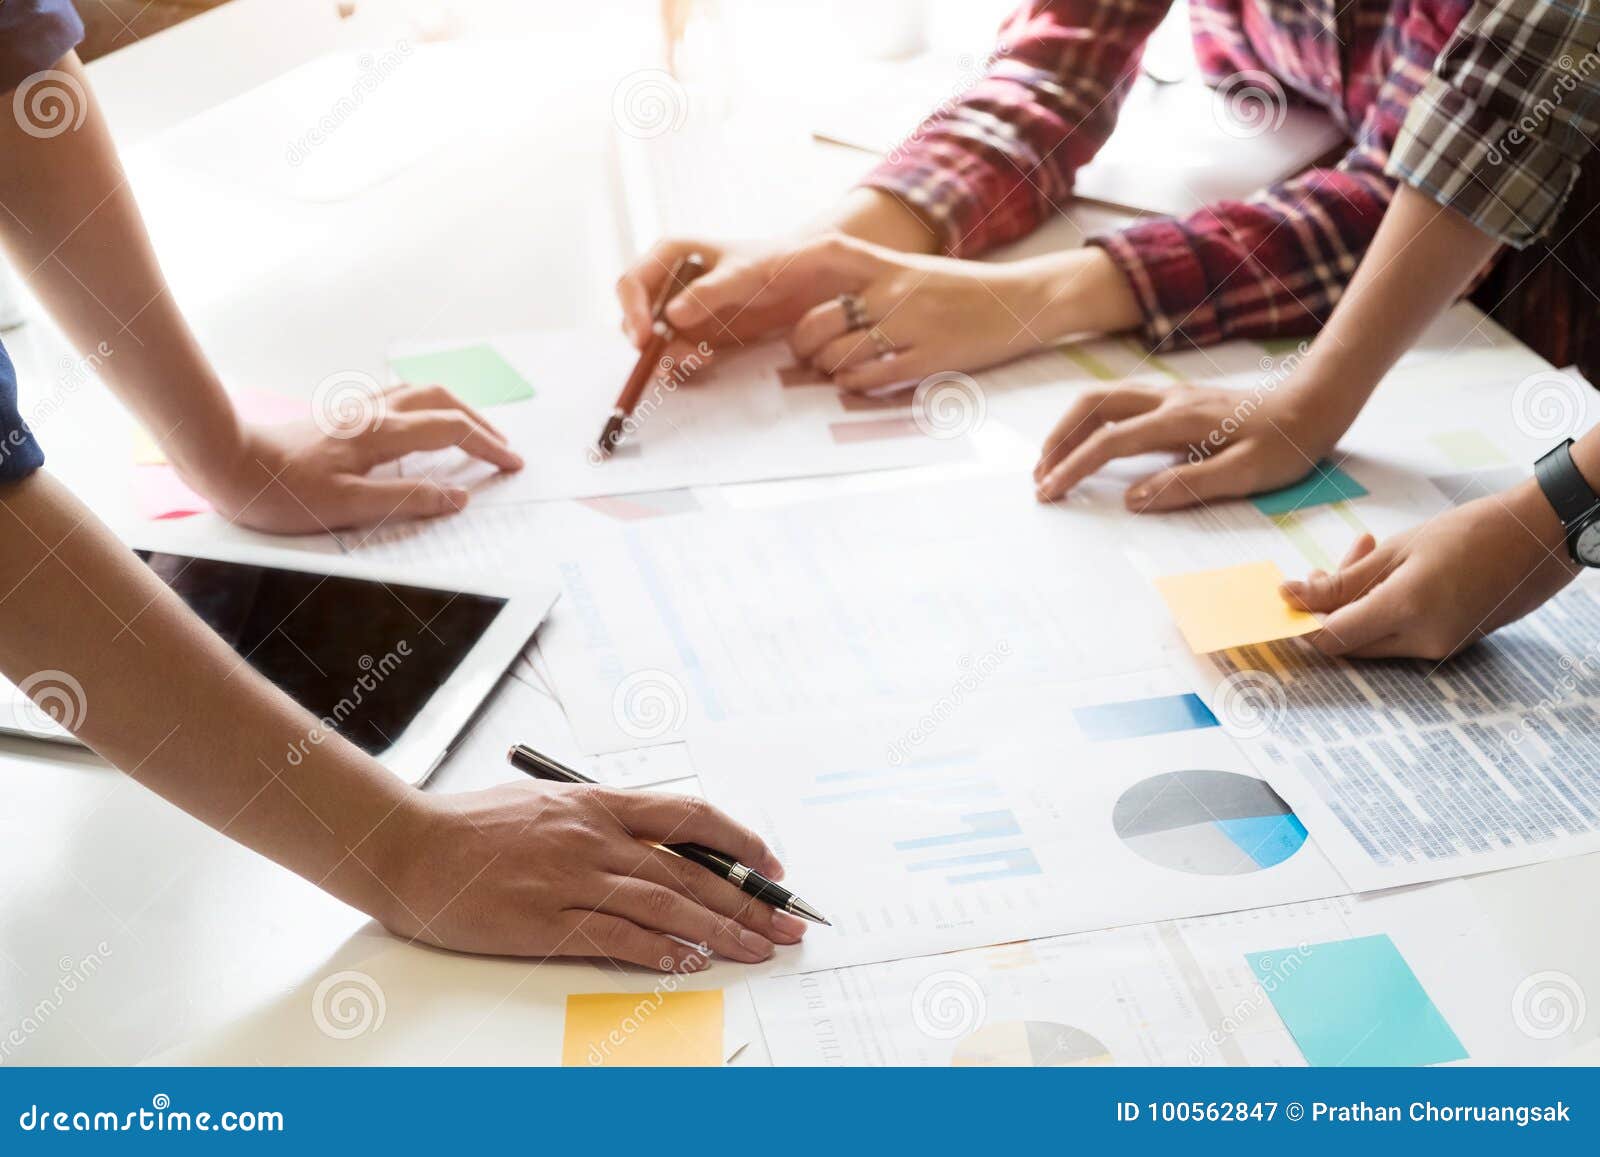 business team adviser analysis financial data on paper denoting